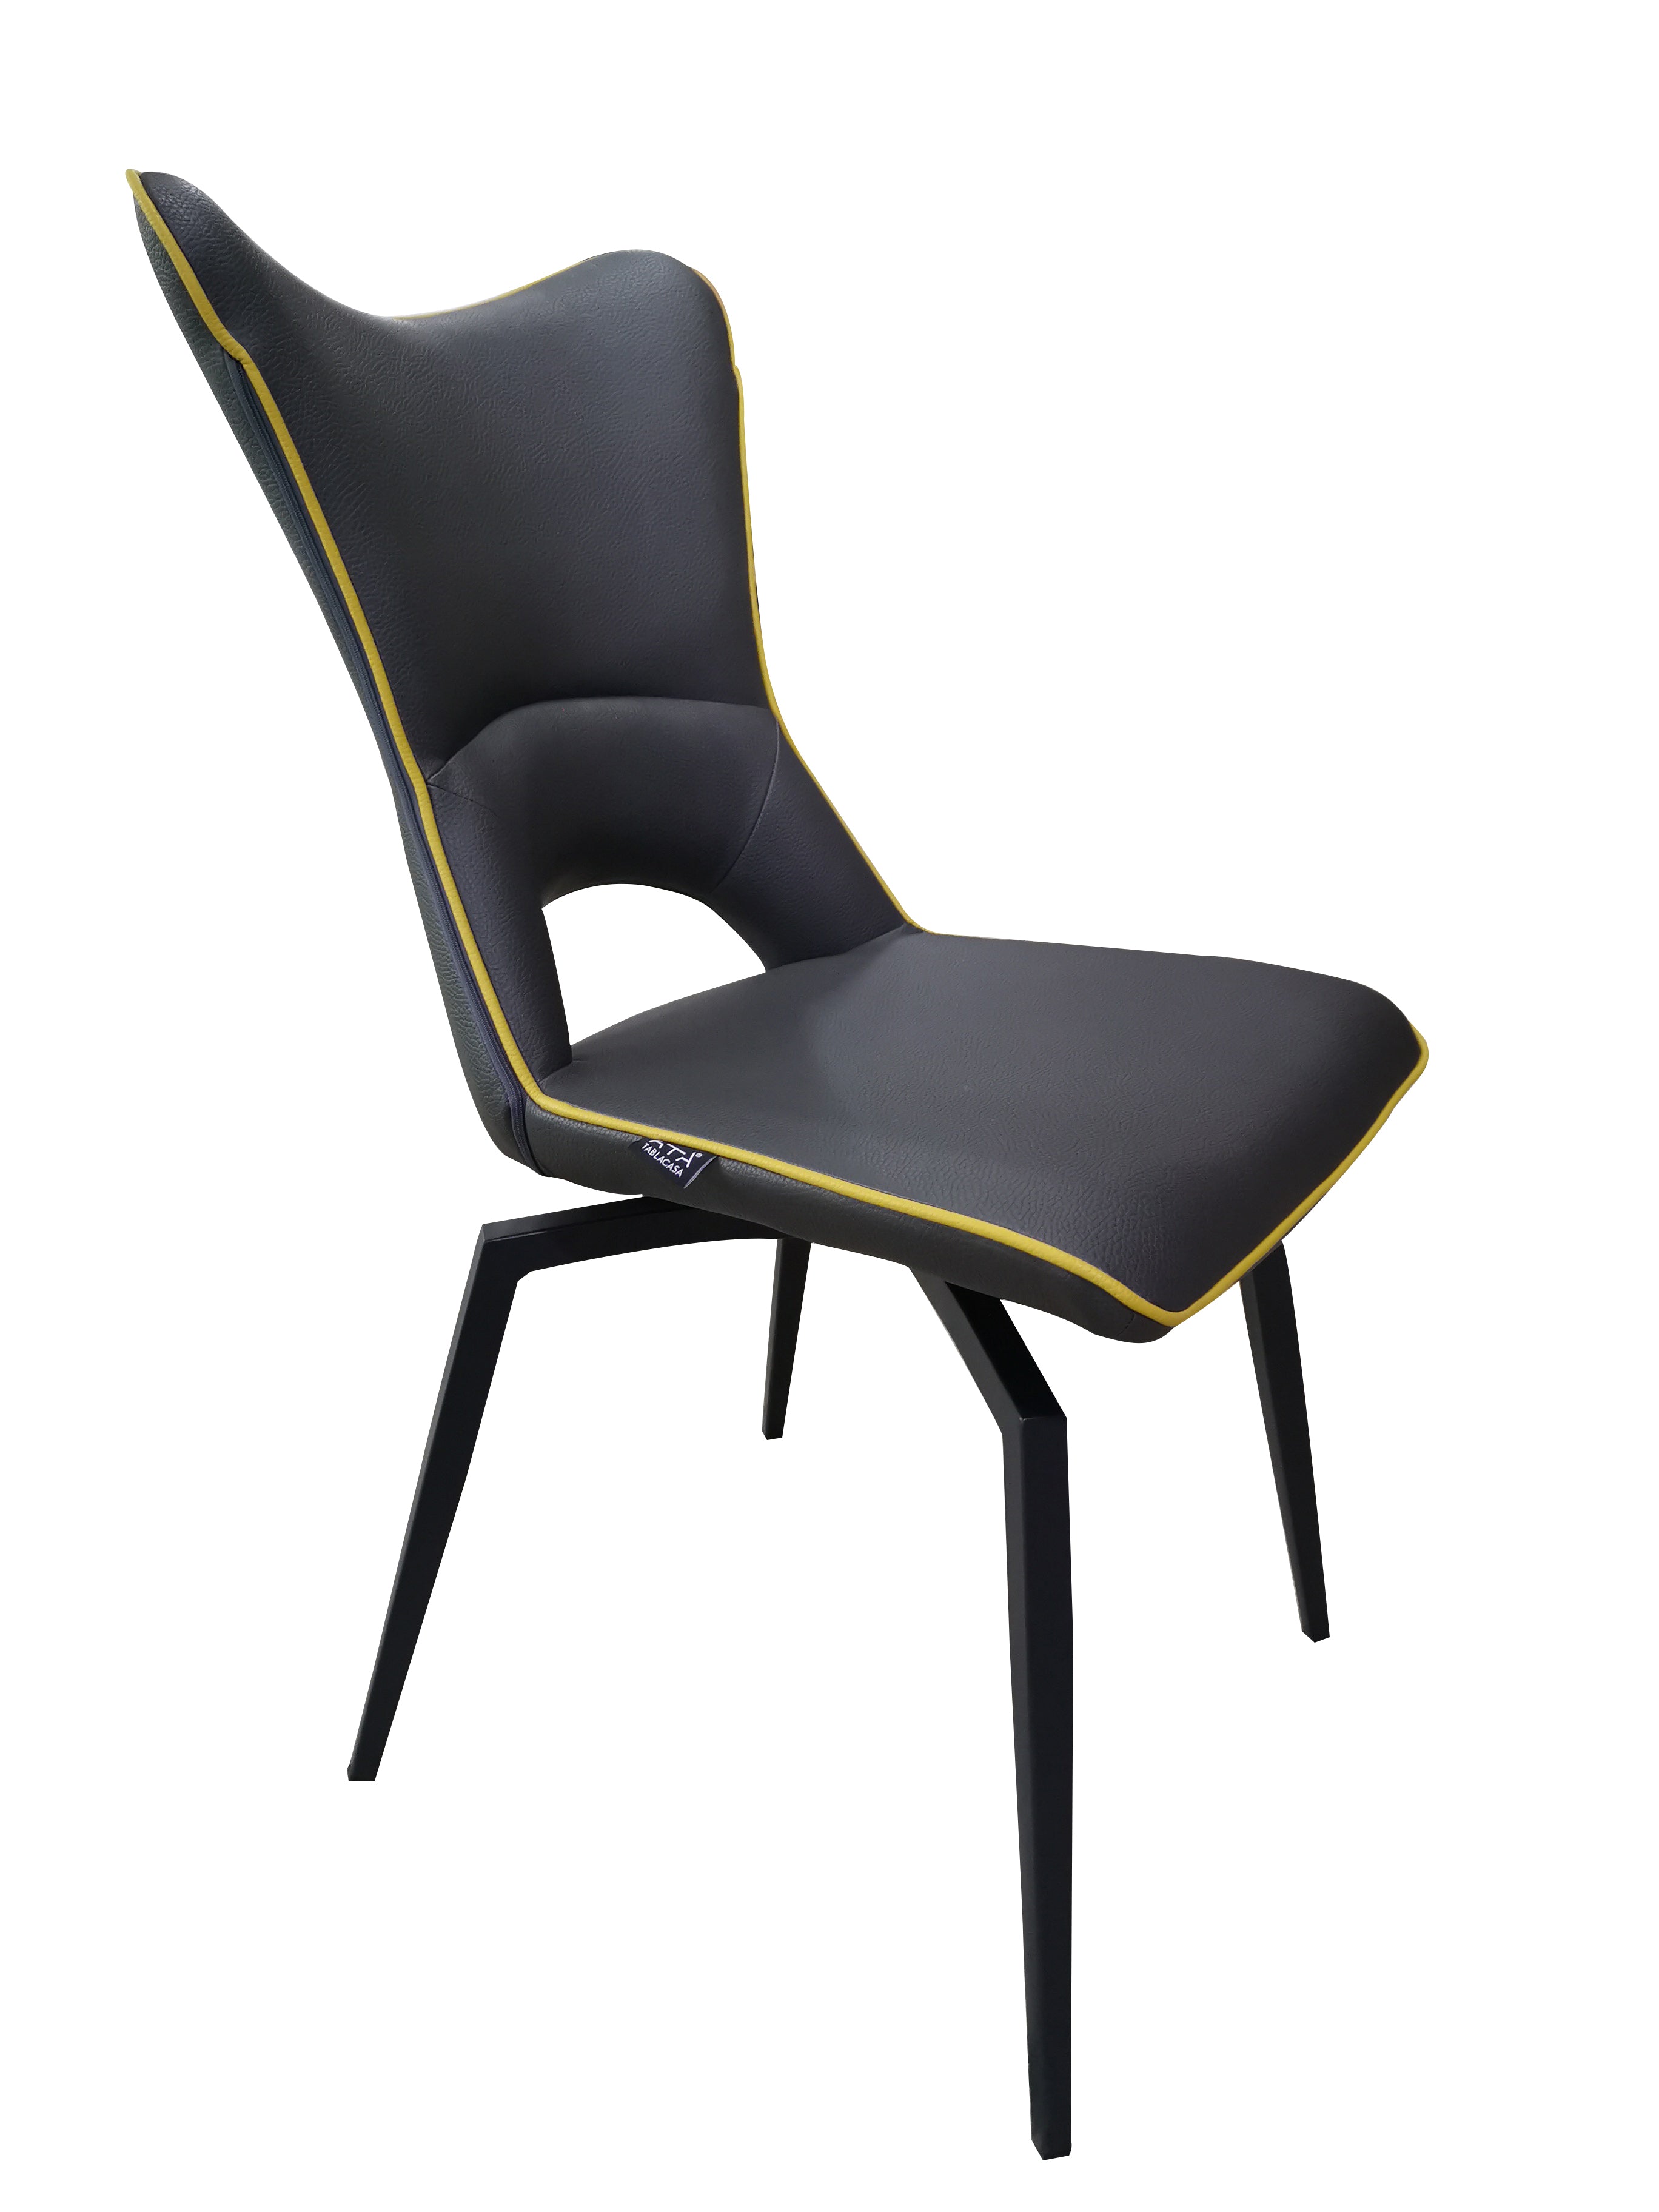 Chaise de salle à manger pivotante design gris anthracite et jaune - Holga